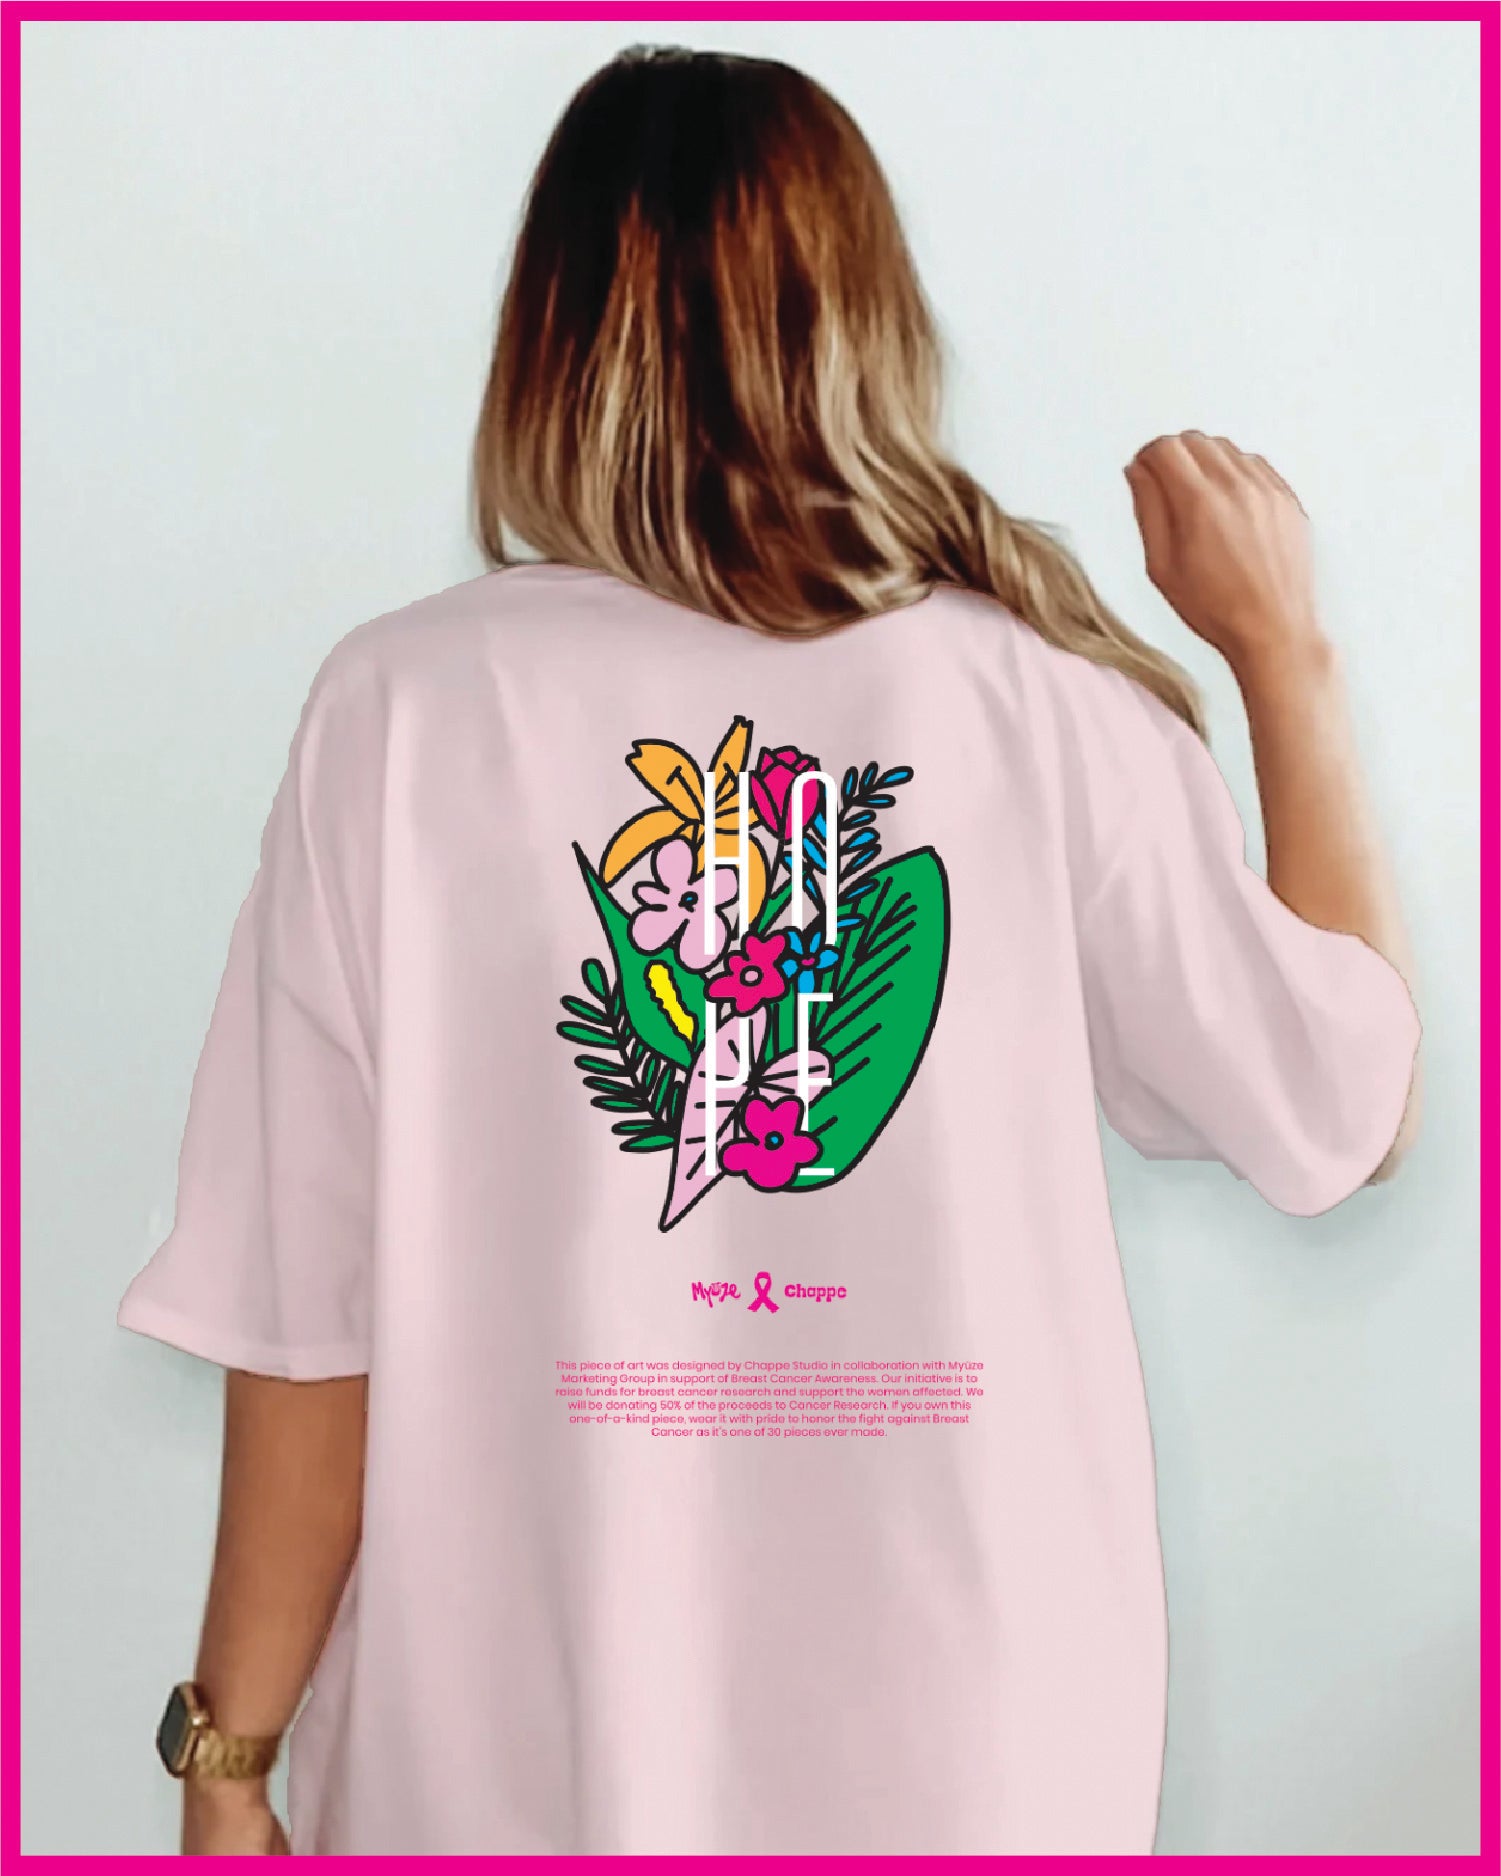 Pink Carnation "Hope" Awareness Shirt Myüze X Chappe